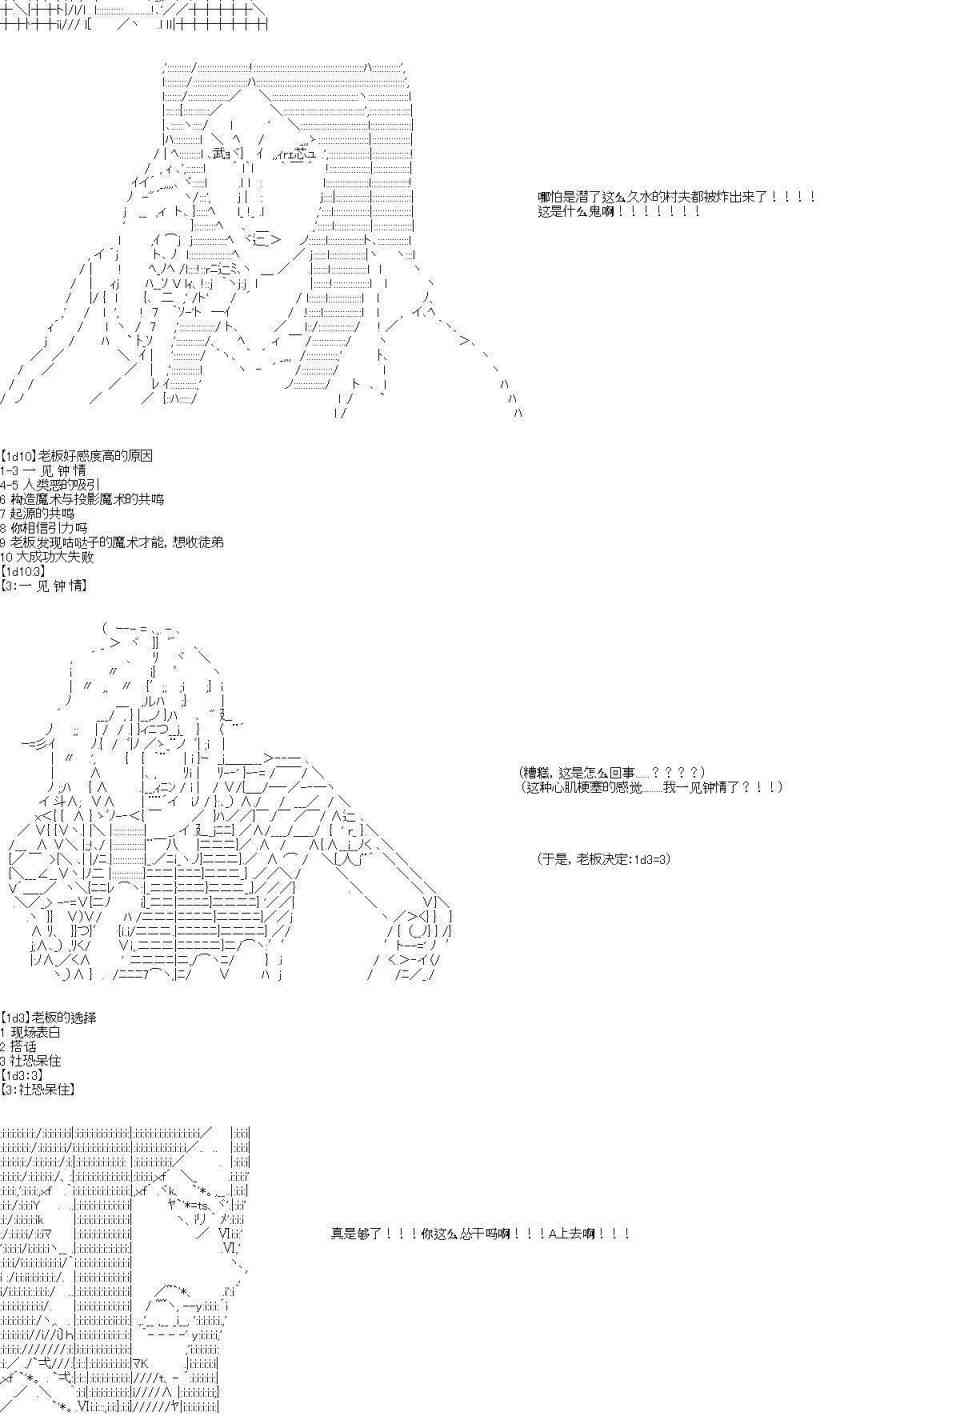 Fate/Grand Order-黃金精神的迪亞波羅正在拯救人理 - 6話(1/2) - 8